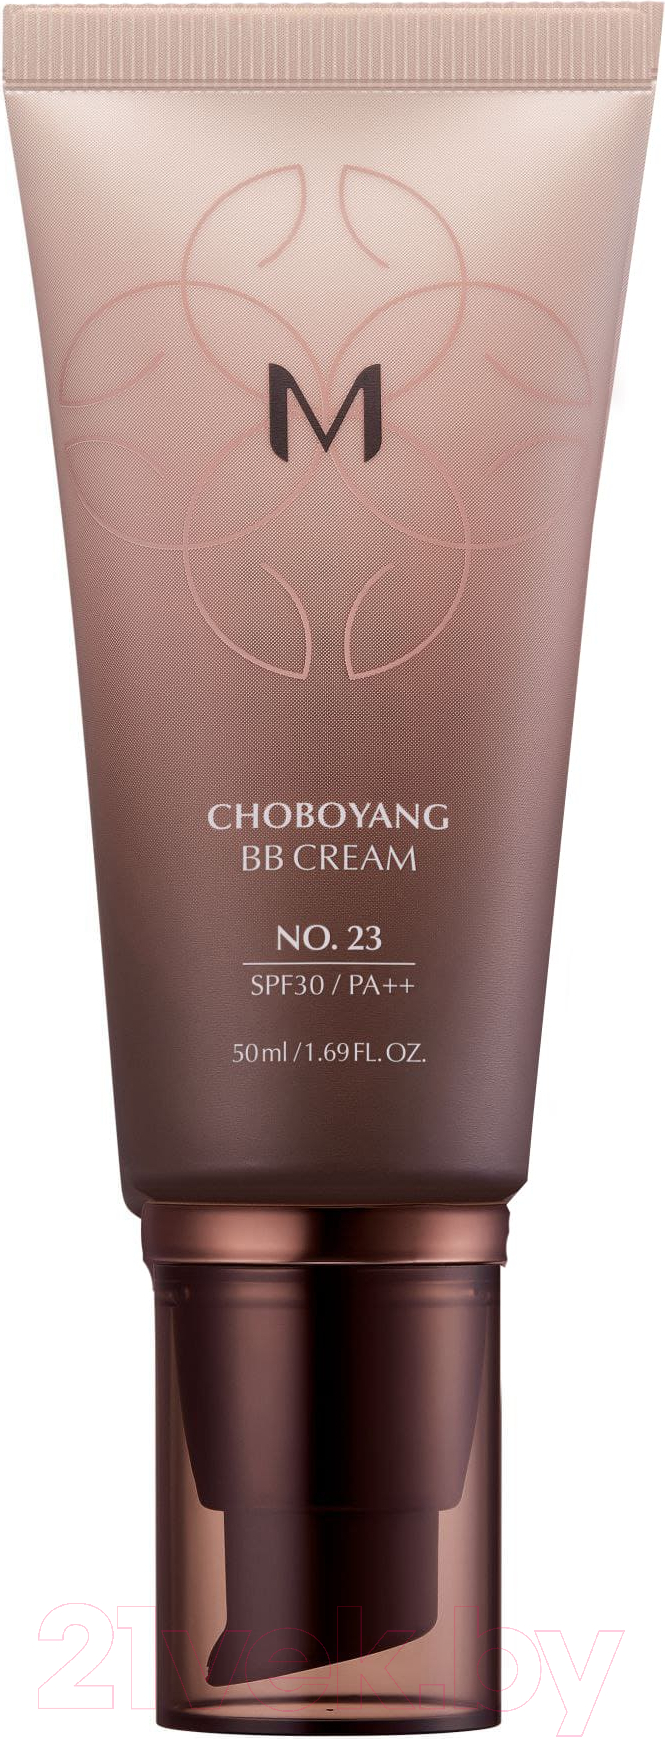 BB-крем Missha M Choboyang BB Cream SPF30/PA++ No.23